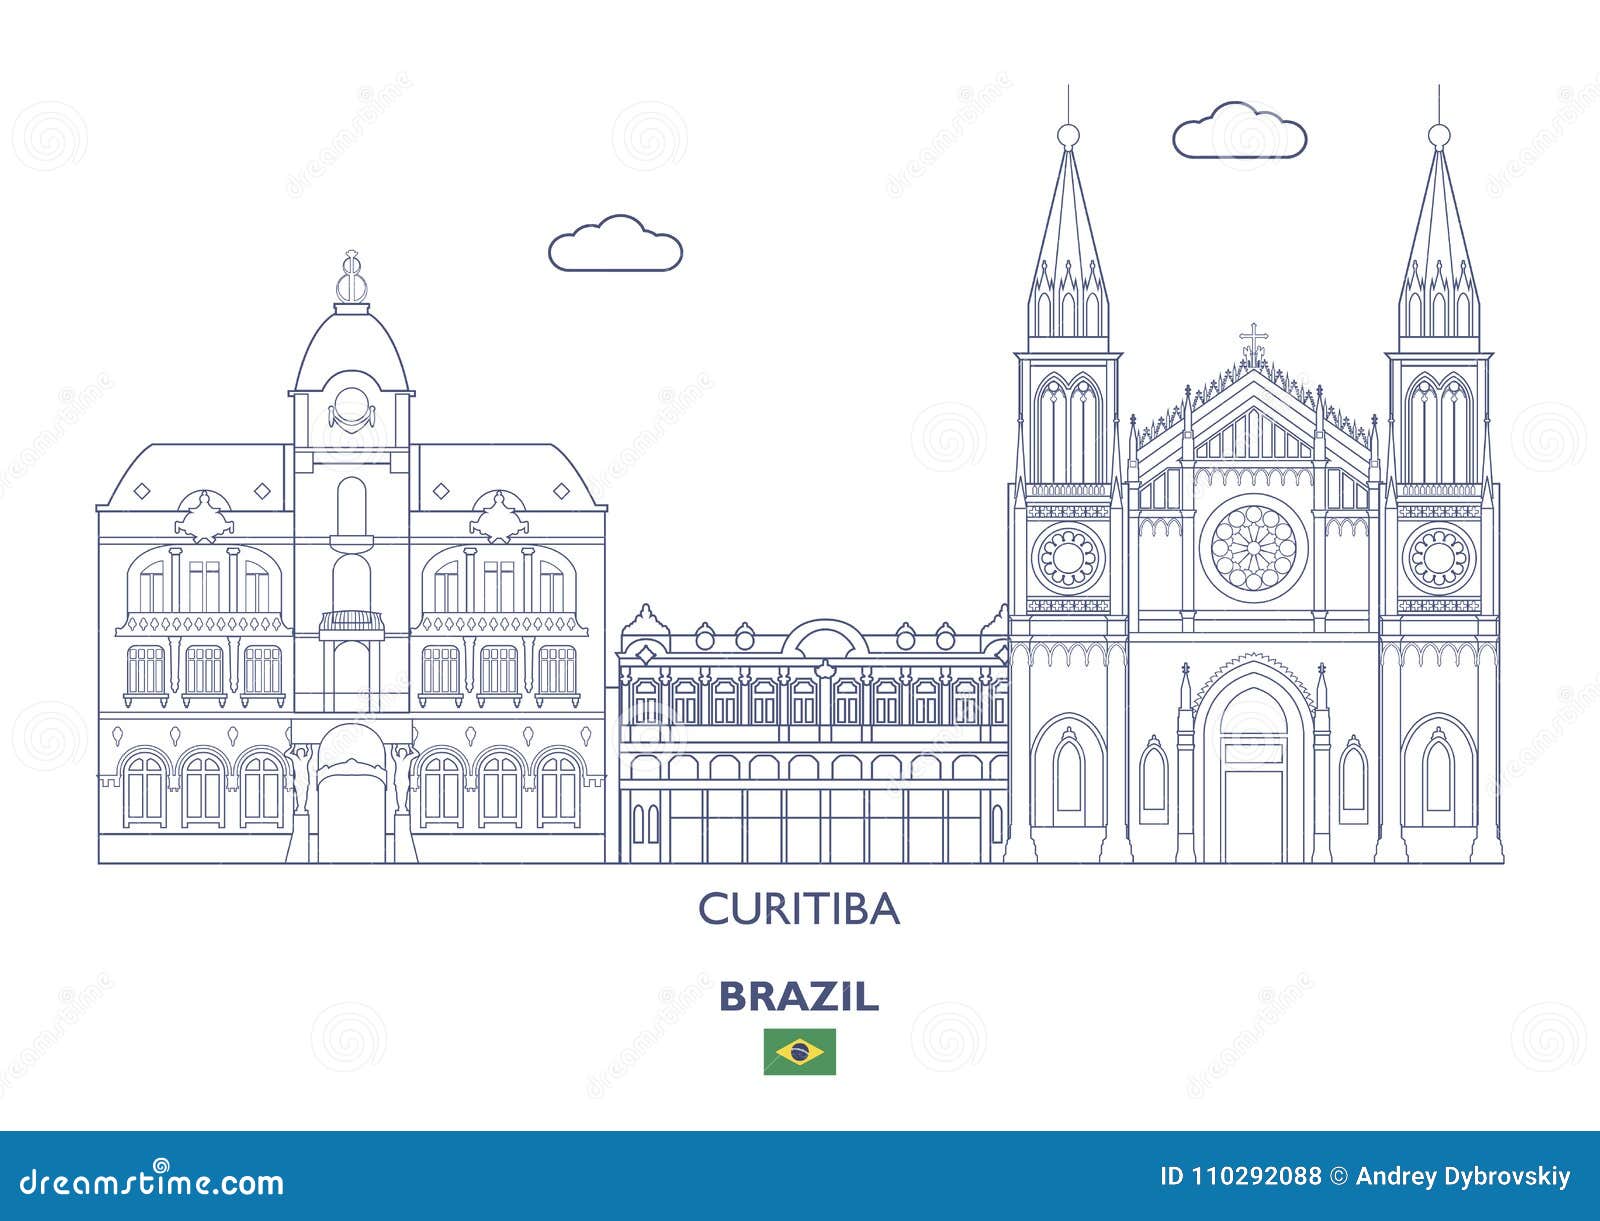 curitiba city skyline, brazil